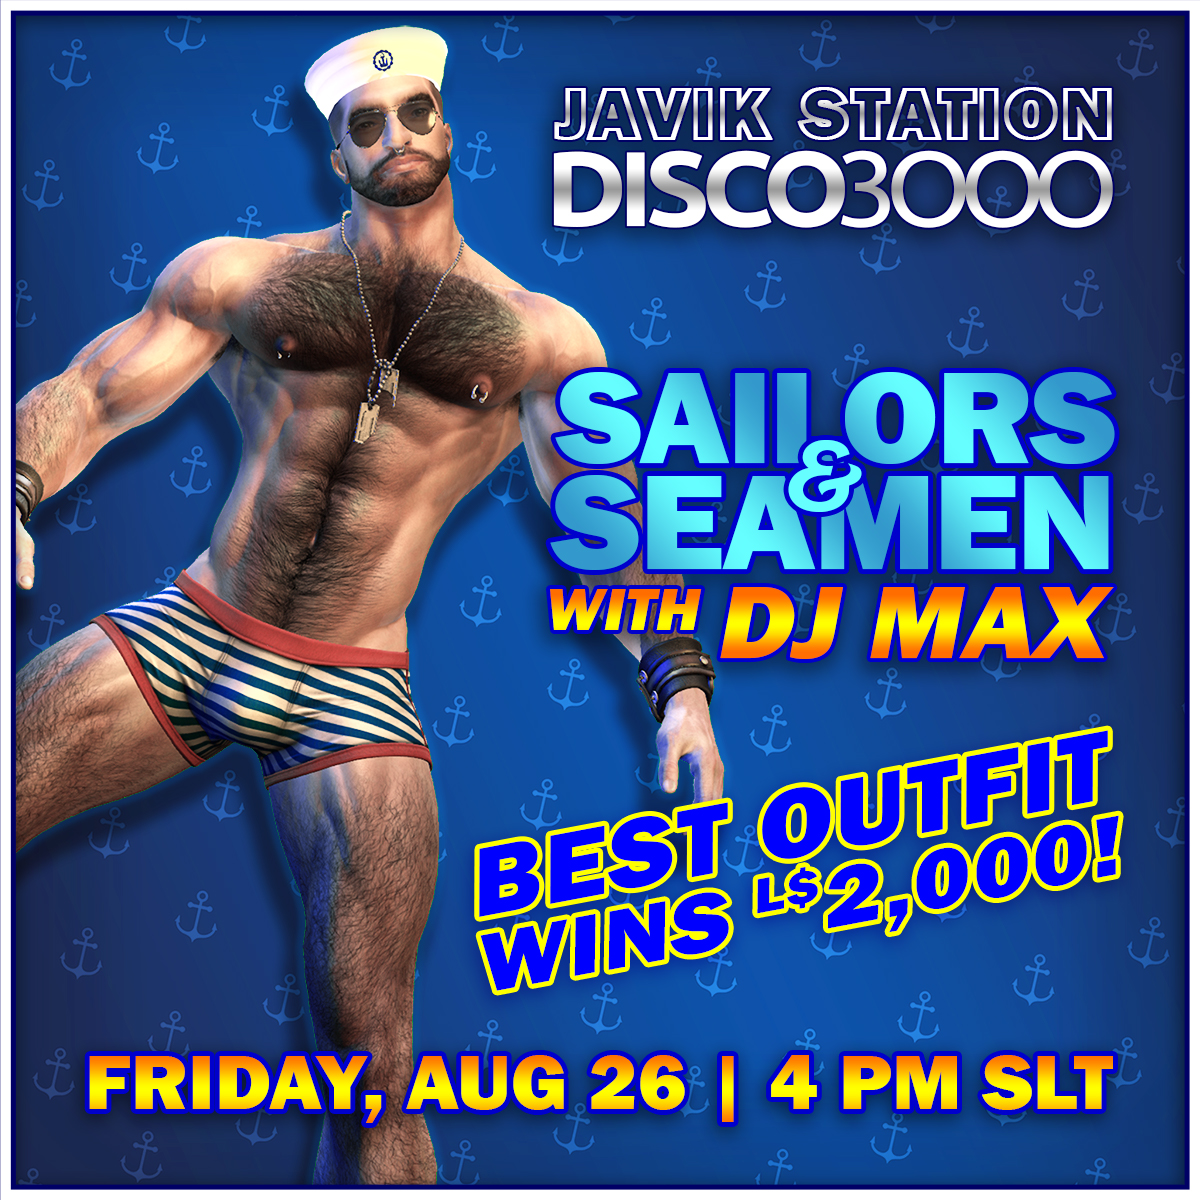 DISCO 3000 SAILORS & SEAMEN PARTY with DJ MAX!